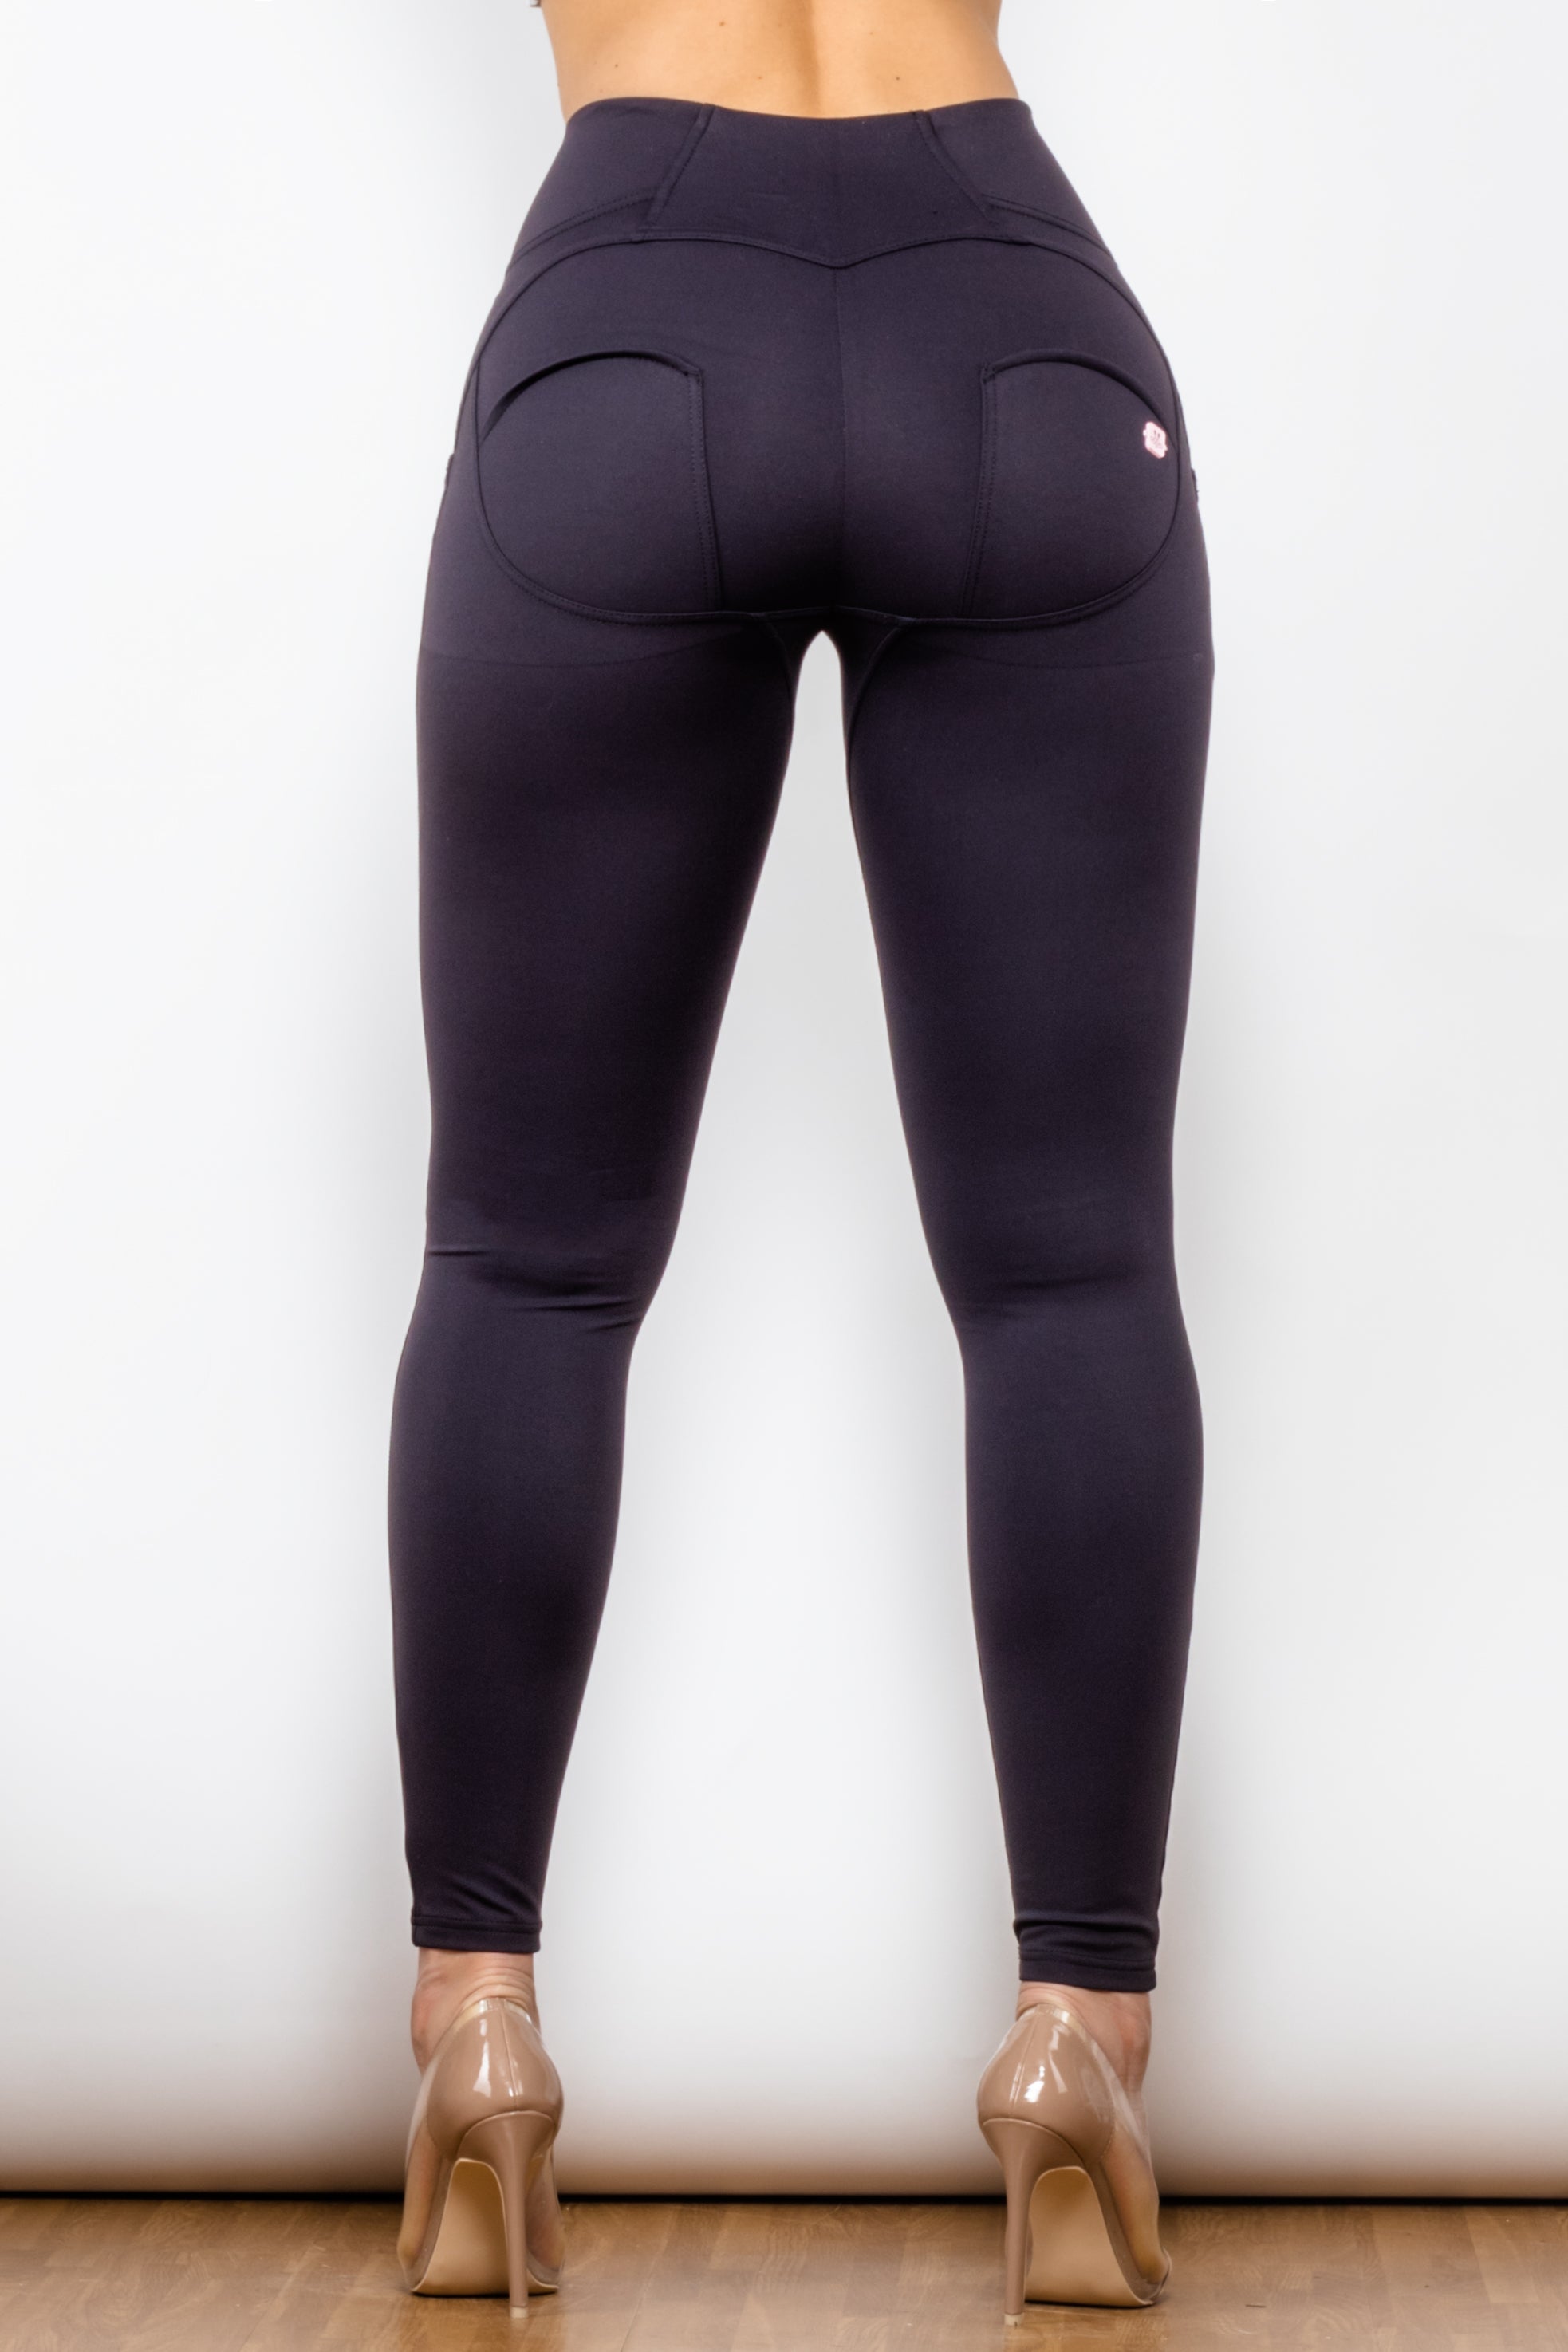 HIGH WAIST BLACK SPANDEX PANTS – Lady Lush Clothing